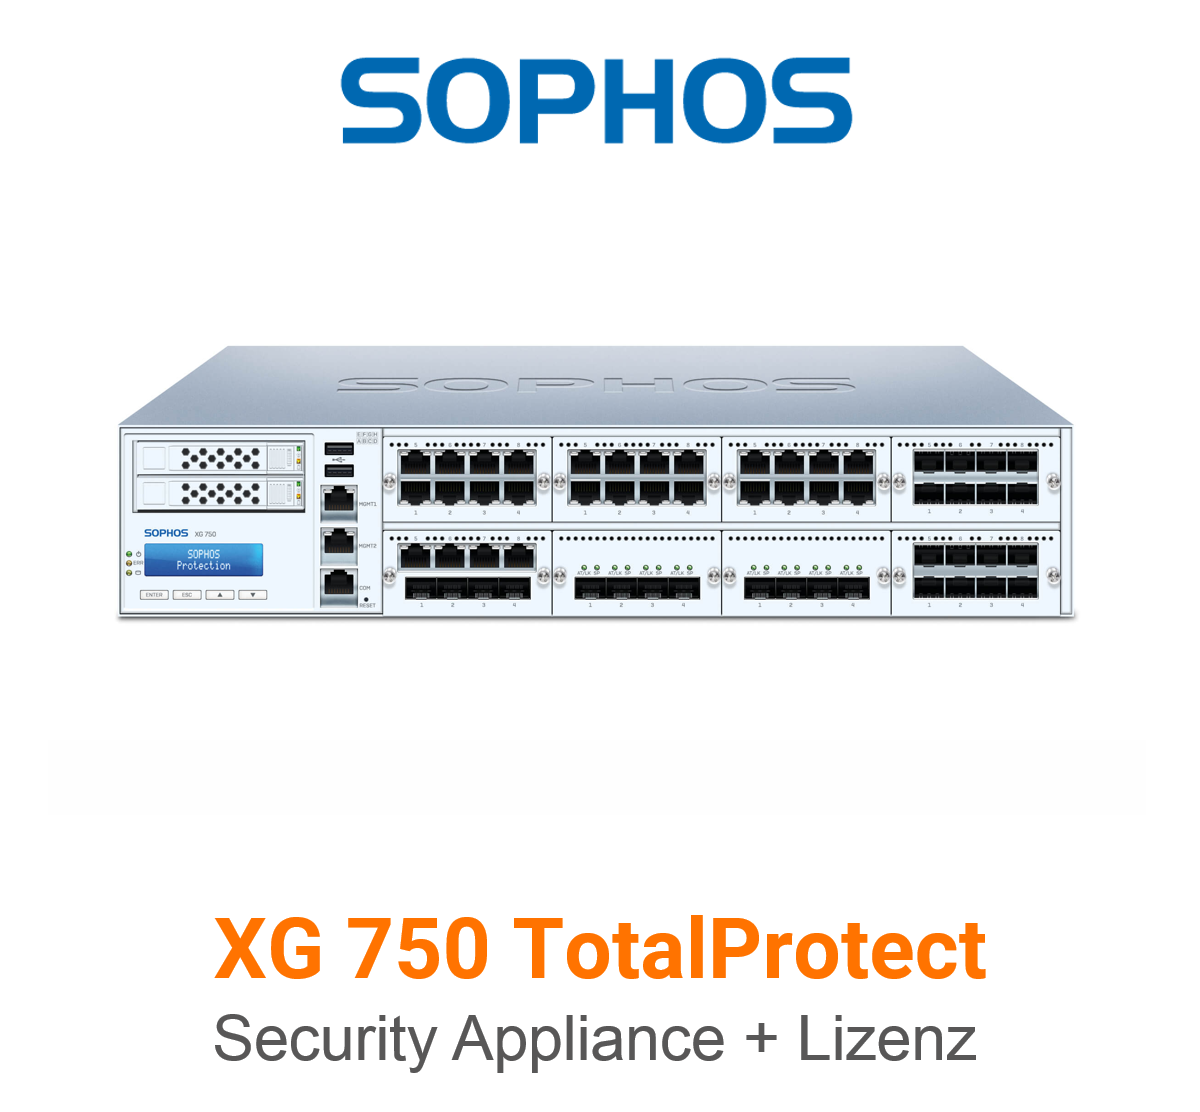 Sophos XG 750 TotalProtect Bundle (Hardware + Lizenz)